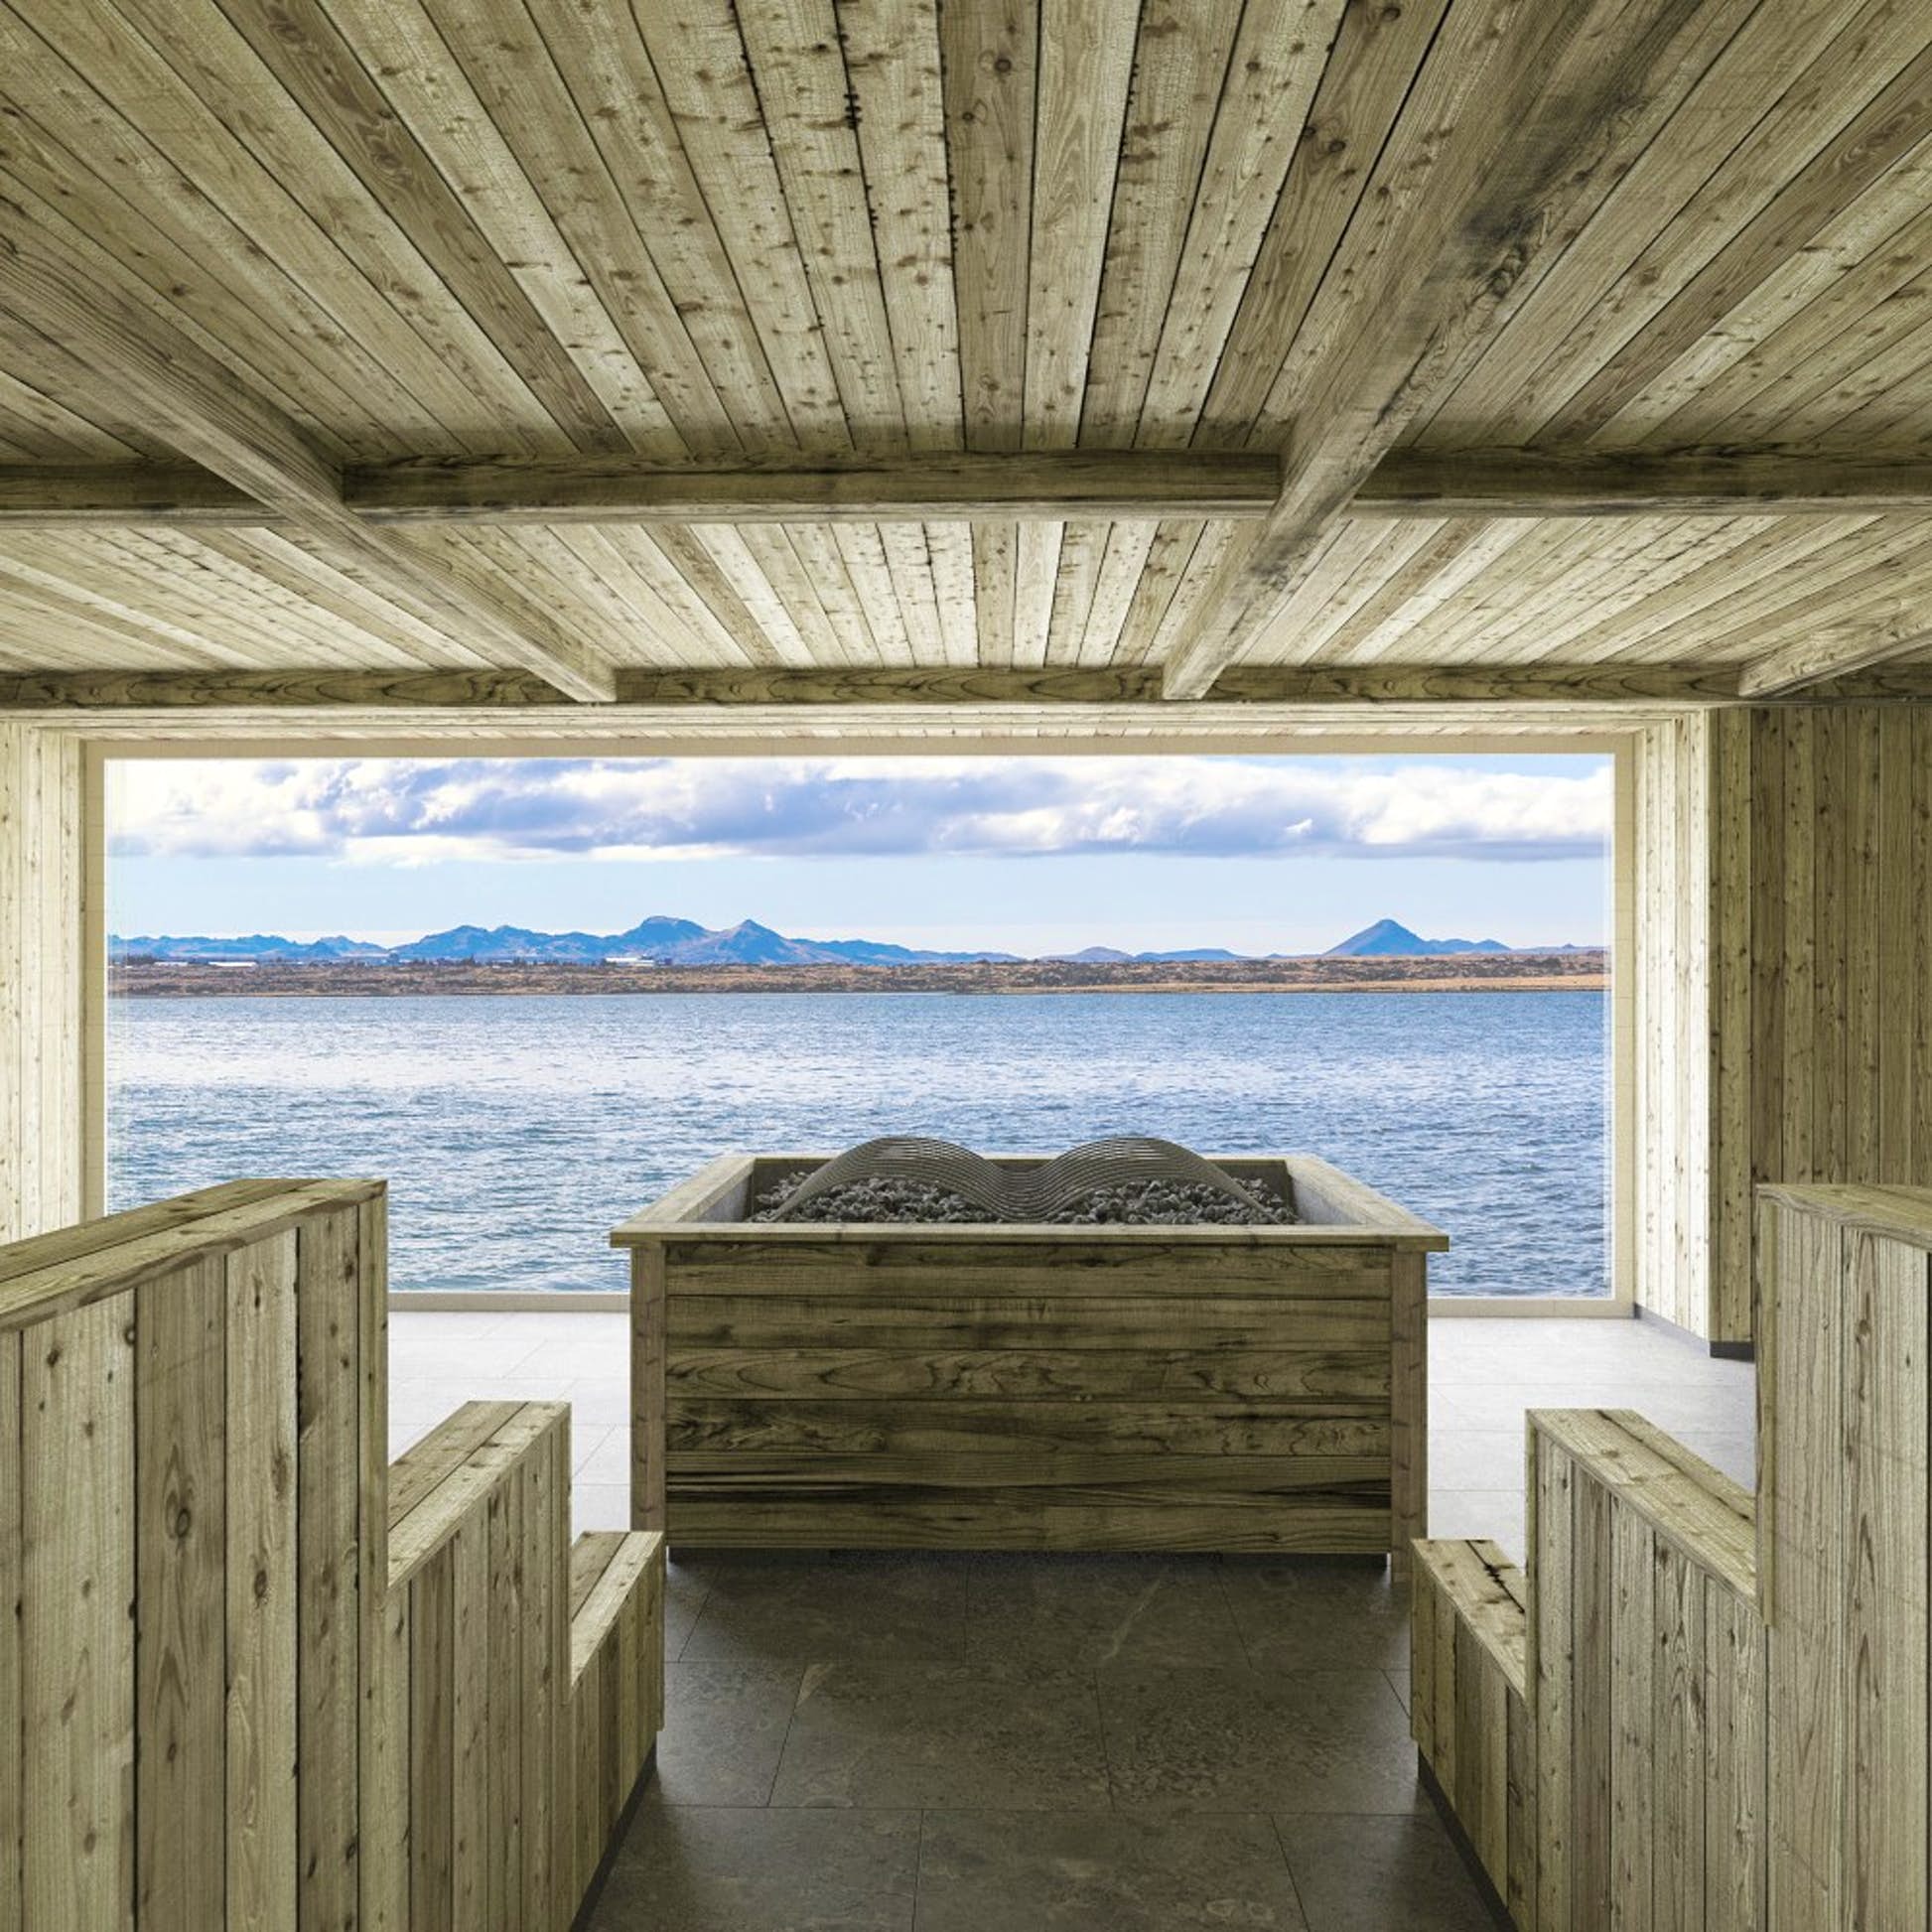 The sauna at Sky Lagoon has amazing views © Pursuit